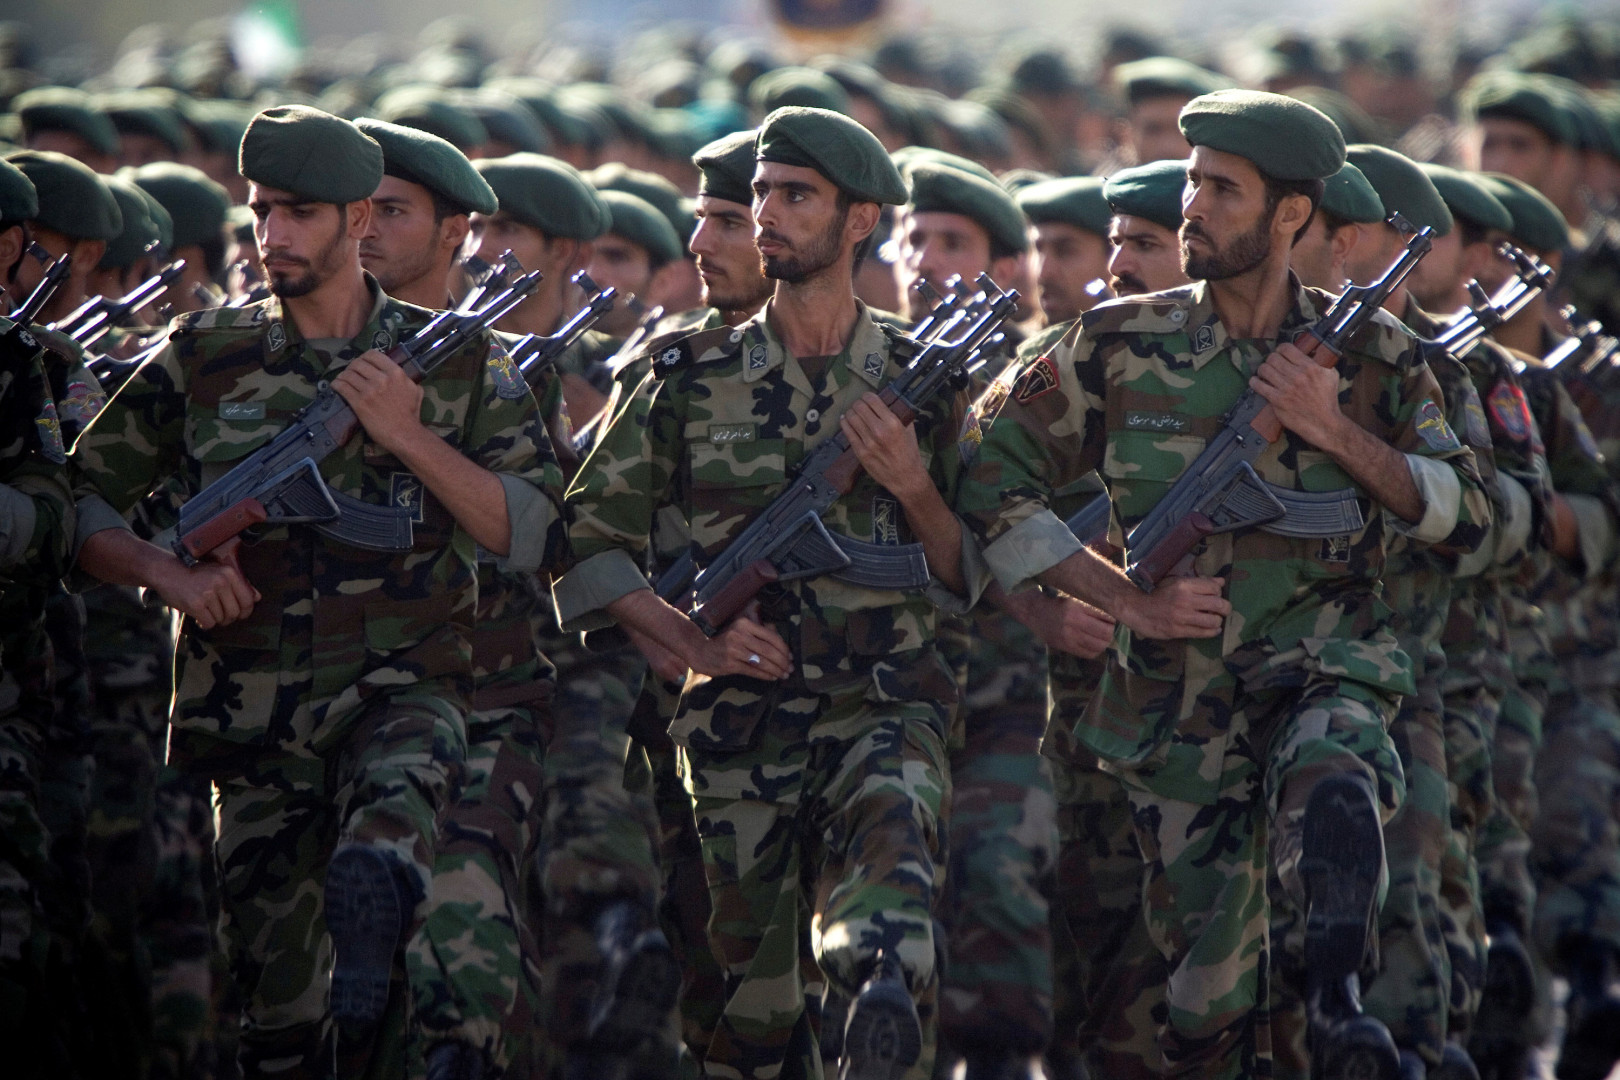 EU cannot brand Iran’s IRGC as terror group before court ruling, EU’s Borrell says